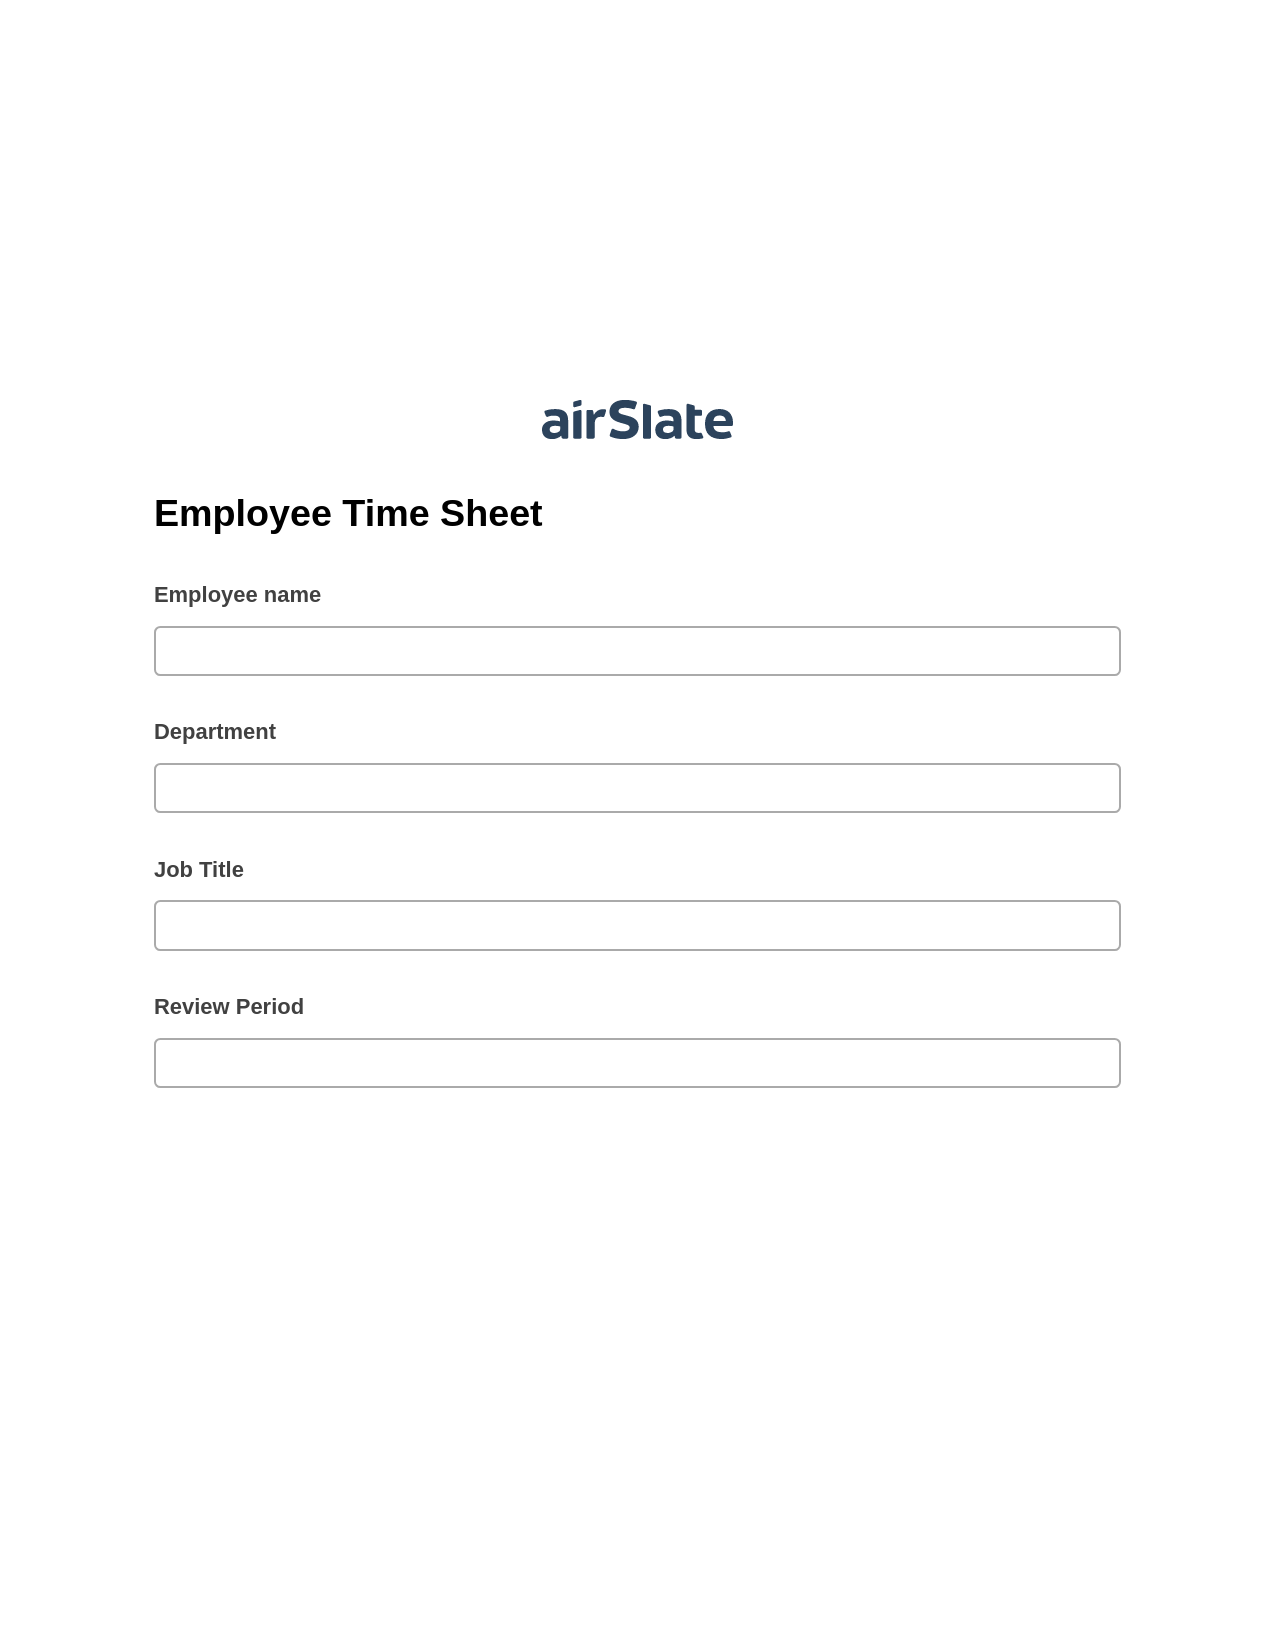 Multirole Employee Time Sheet Pre-fill Document Bot, SendGrid send Campaign bot, Export to Google Sheet Bot